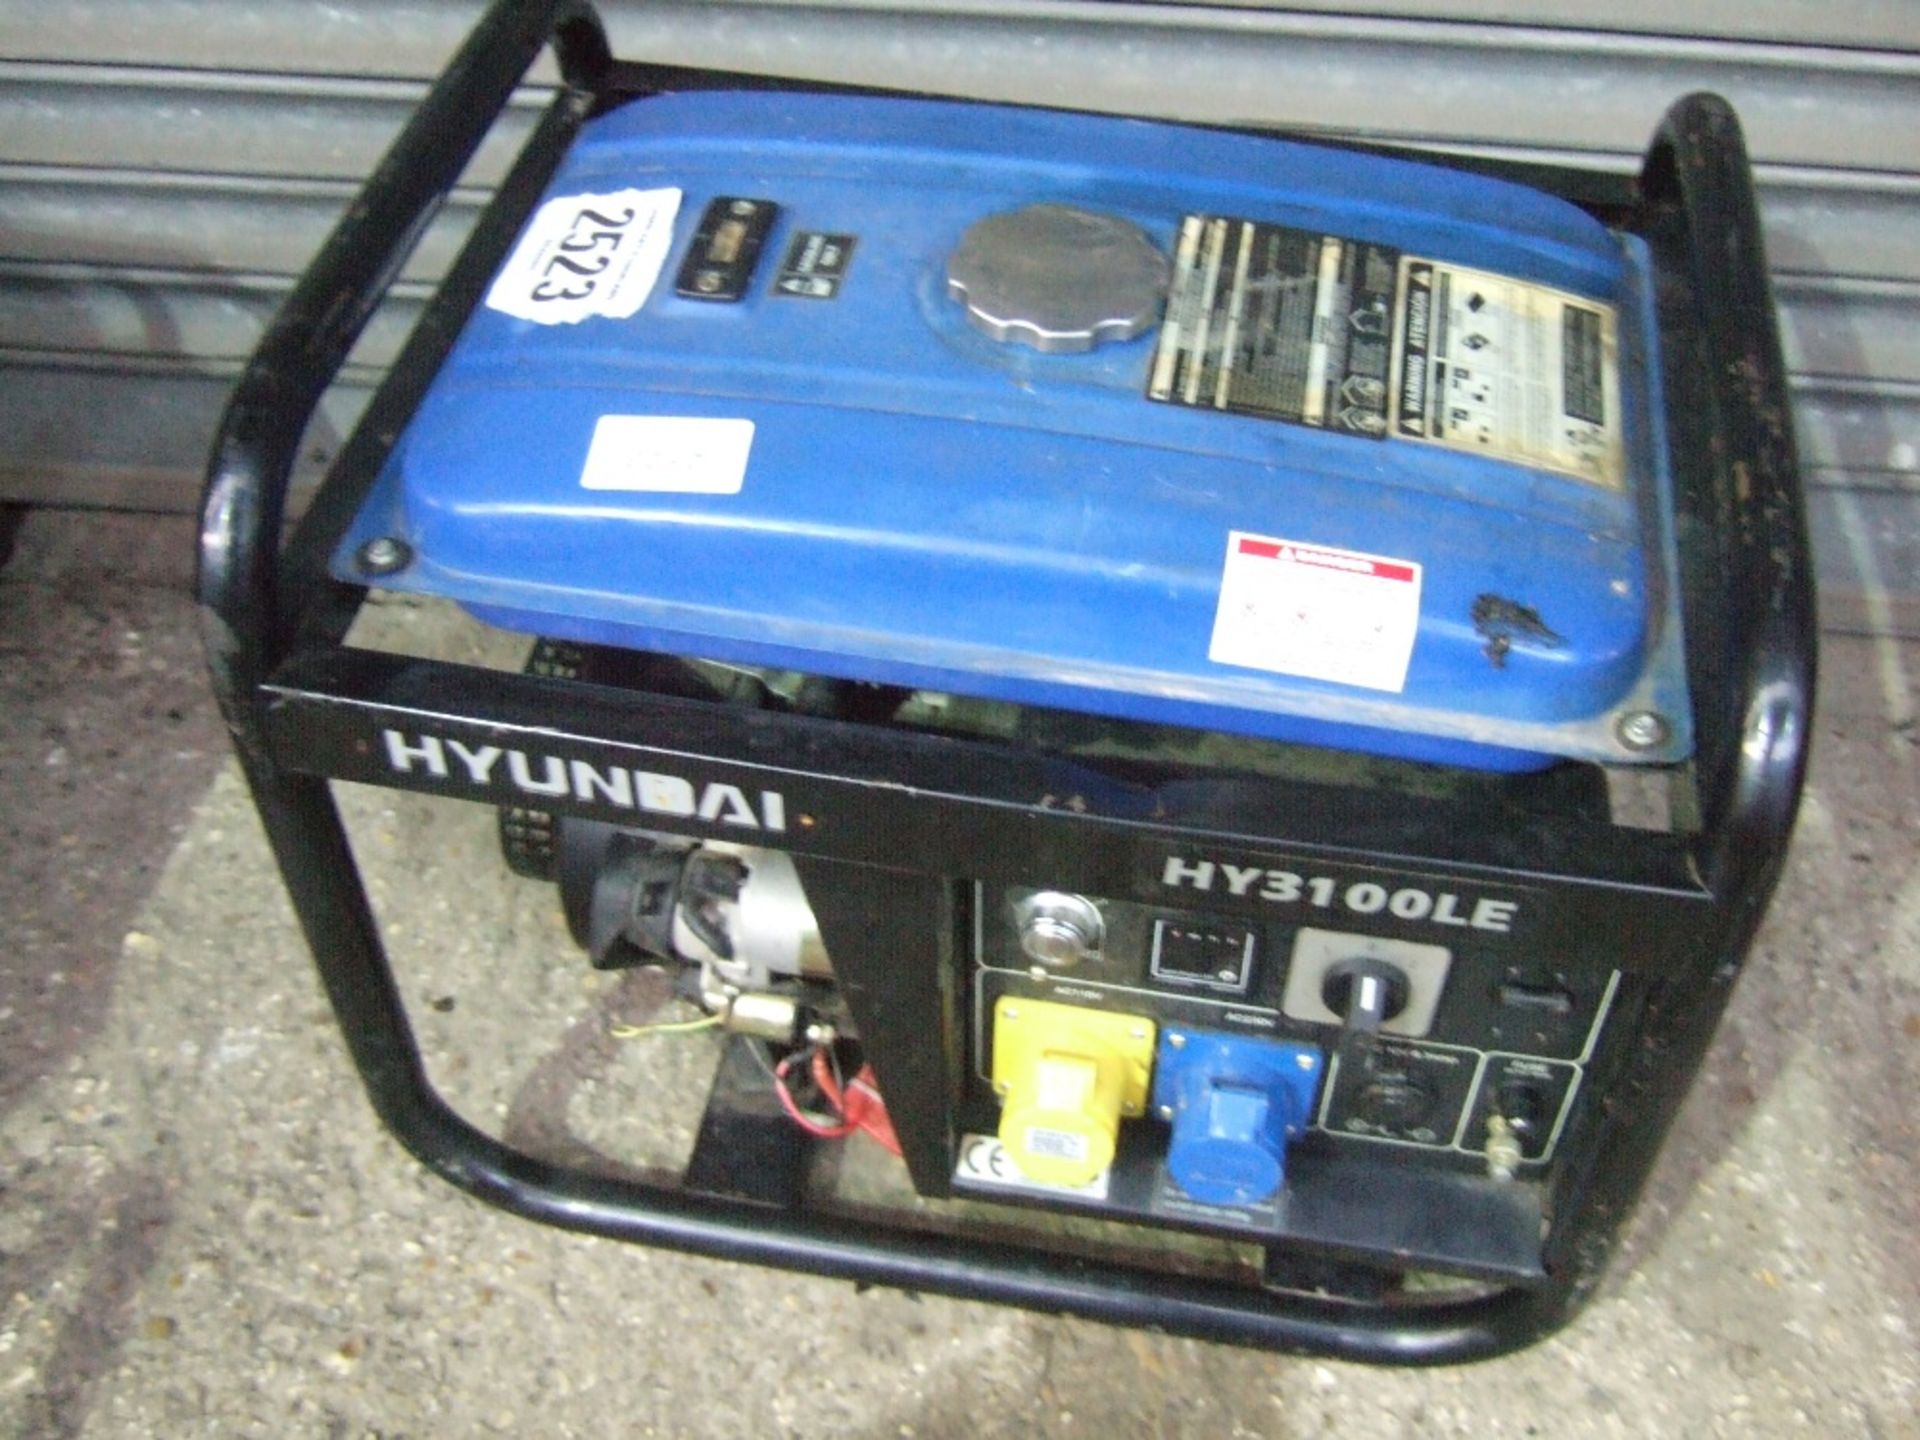 Hyundai 3.1kva electric start generator